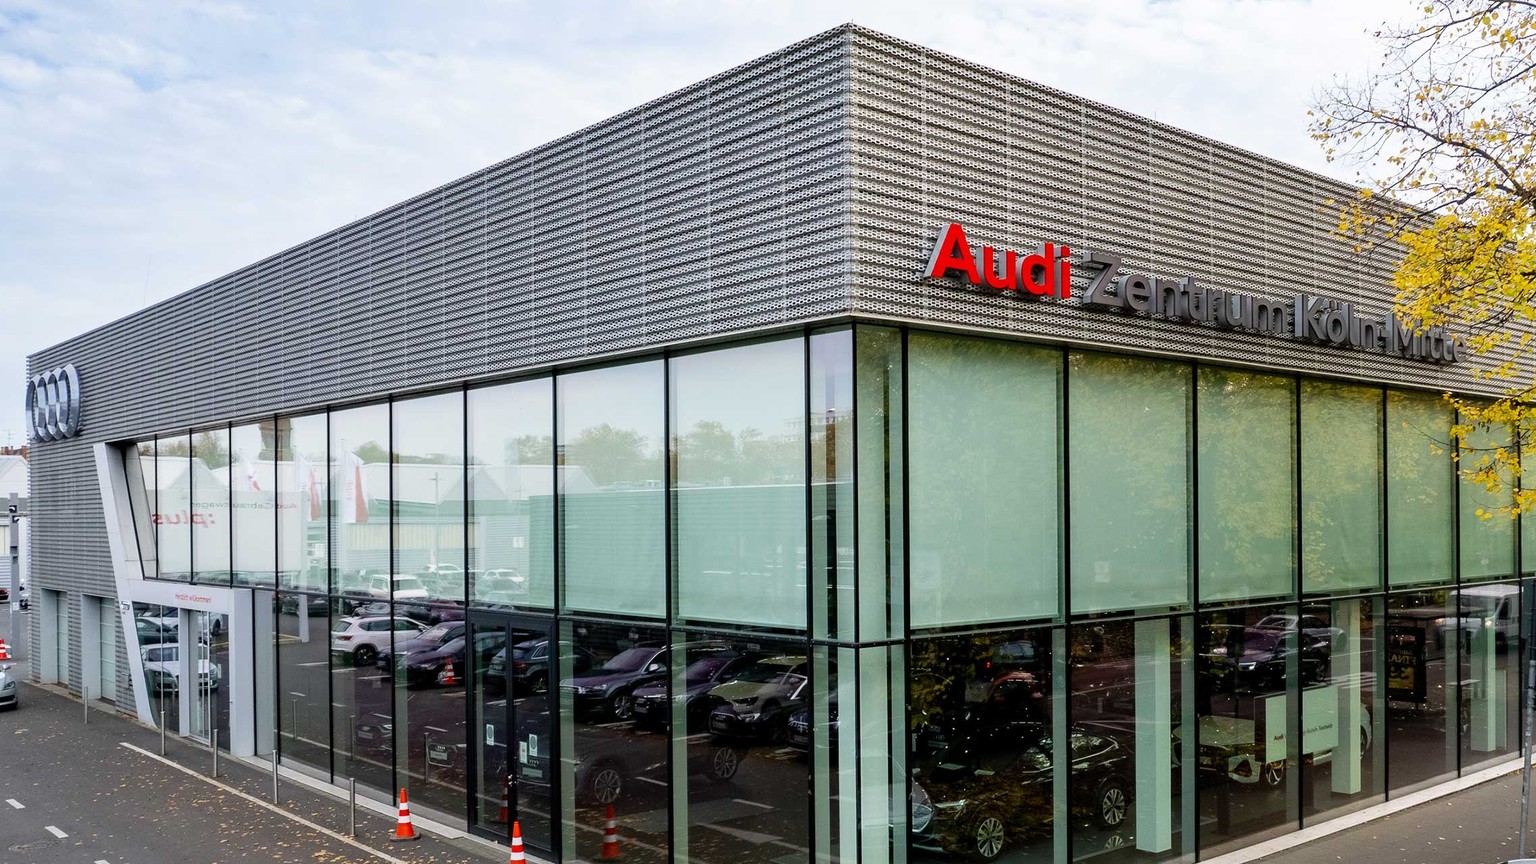 Schwarze Ringe  Audi Zentrum Köln-Mitte